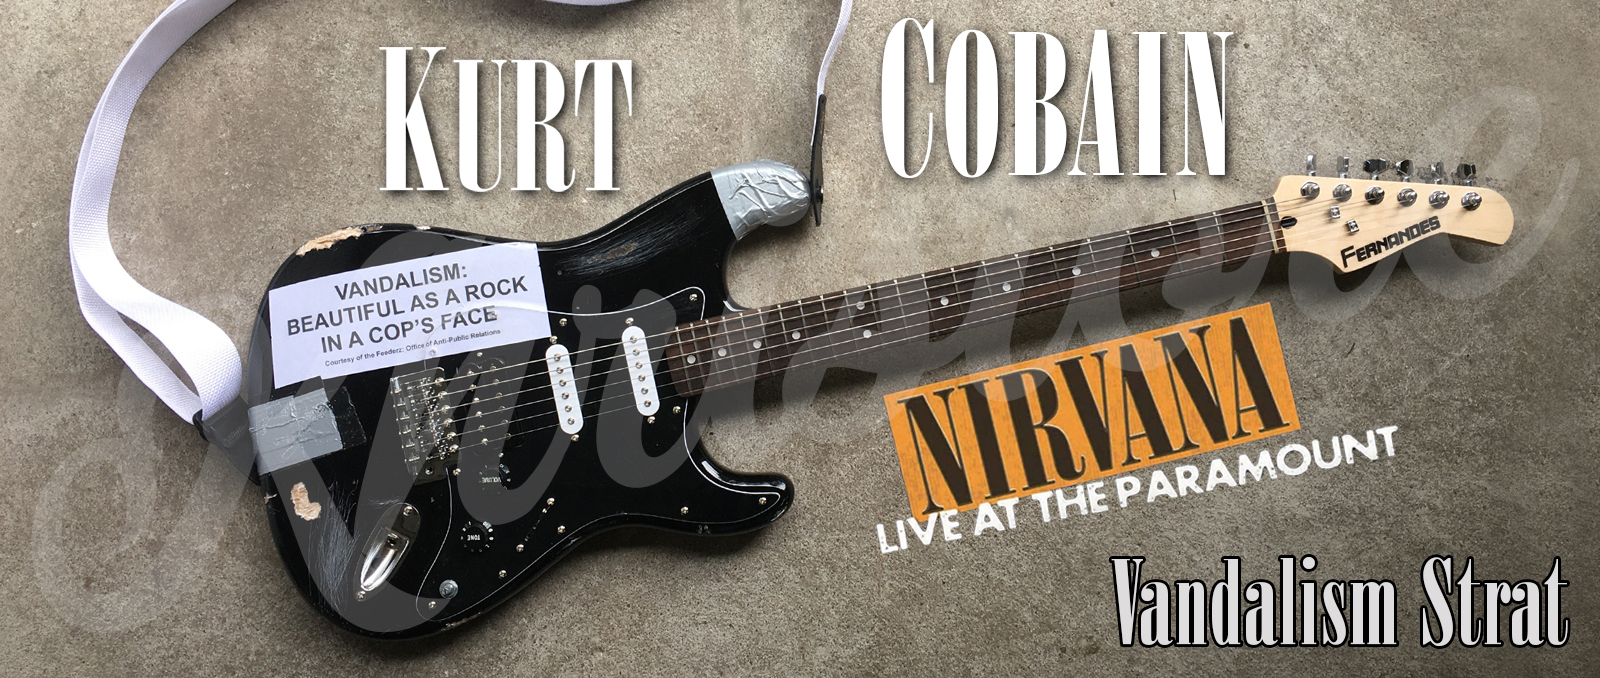 1-Kurt-Cobain-Vandalism-Strat-Live-at-the-Paramount-replica-by-khristore